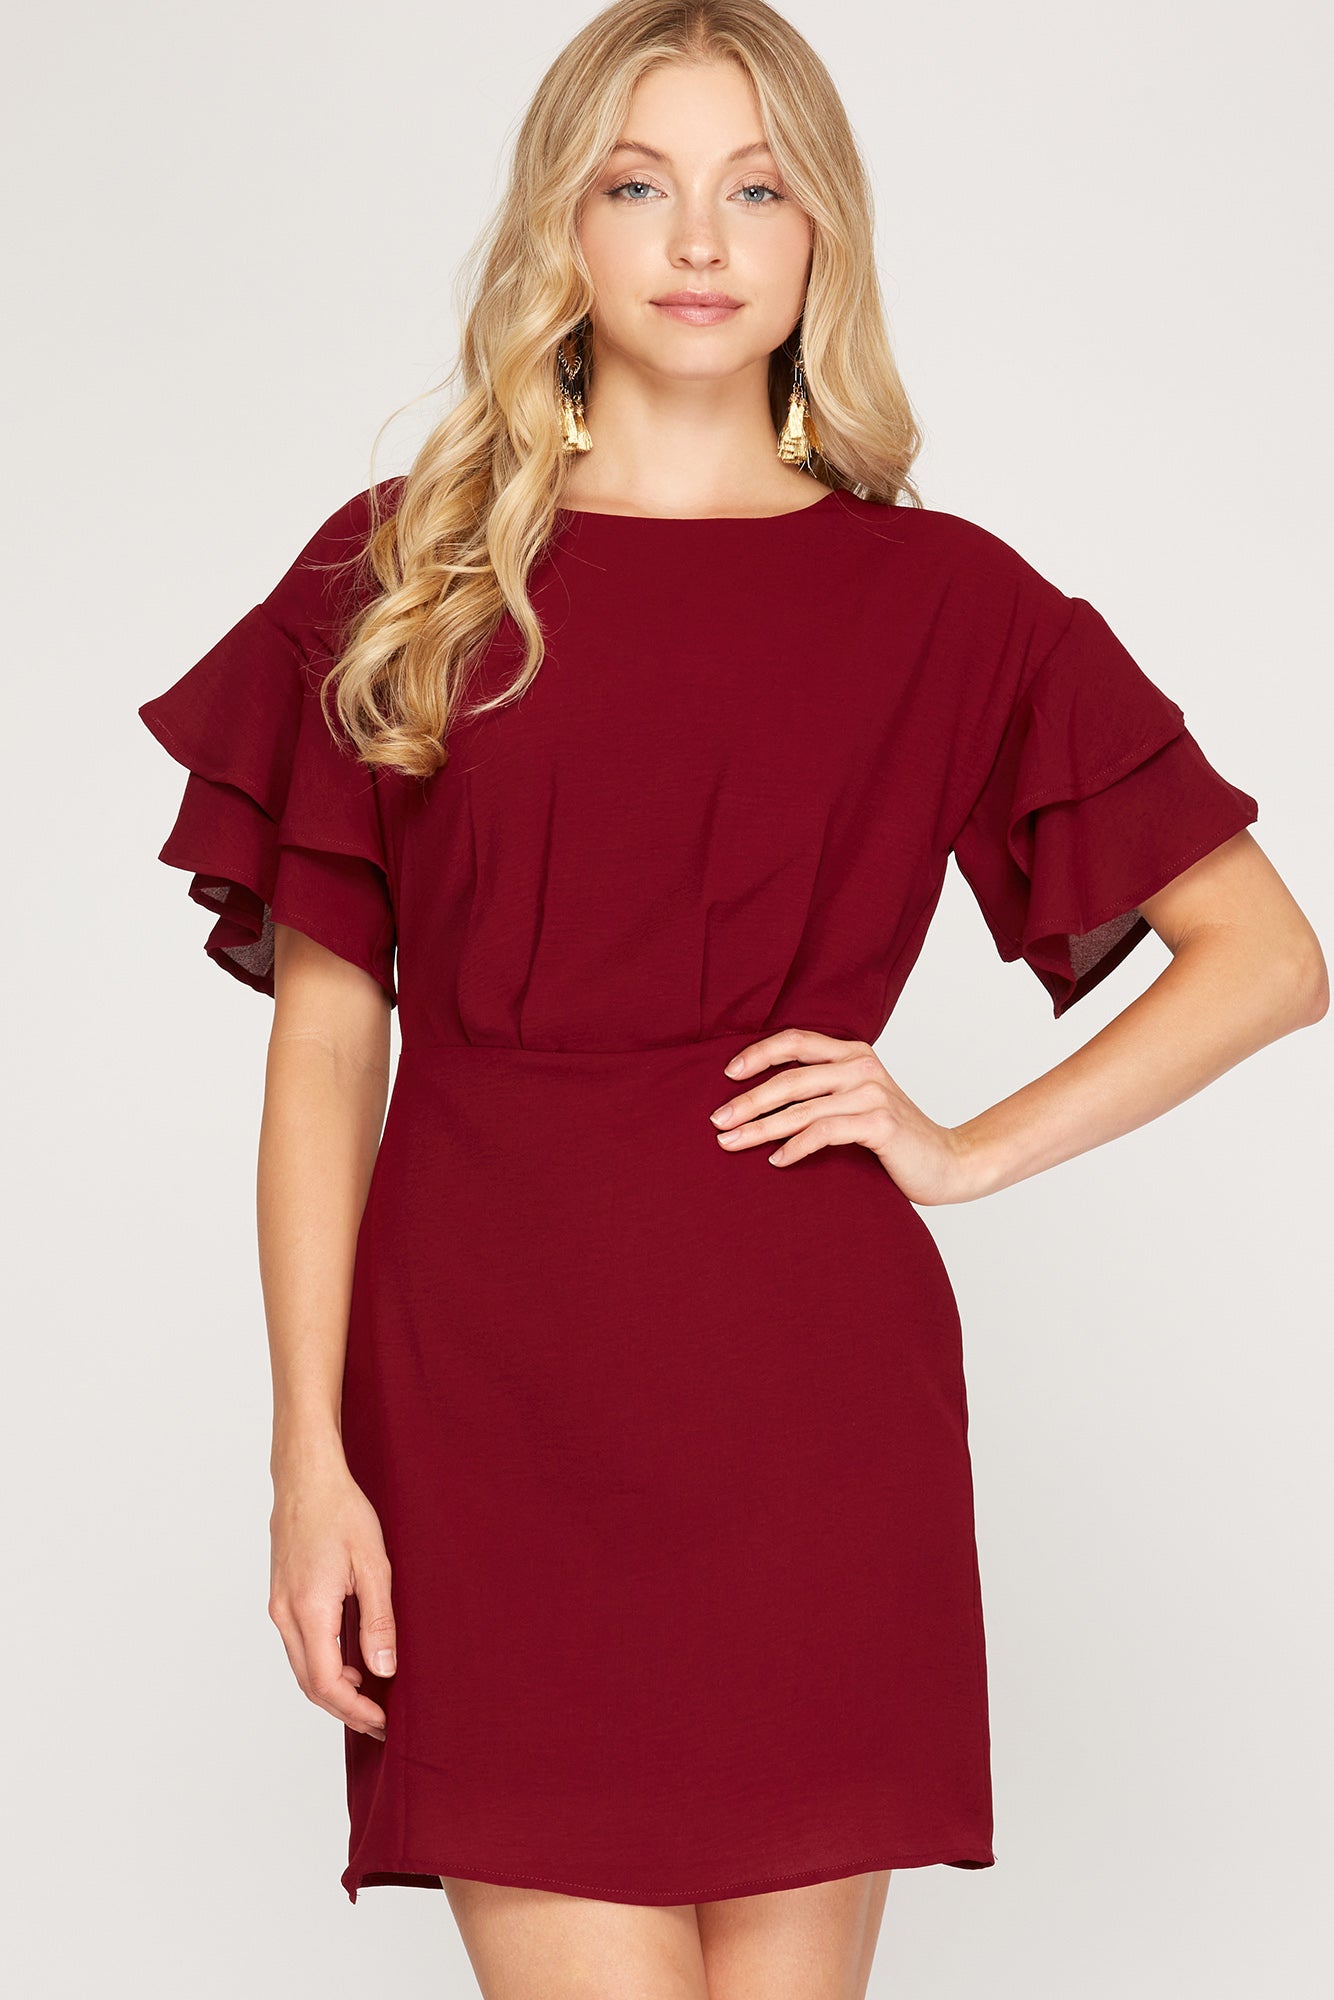 Holly - Cranberry Ruffle Sleeve Dress